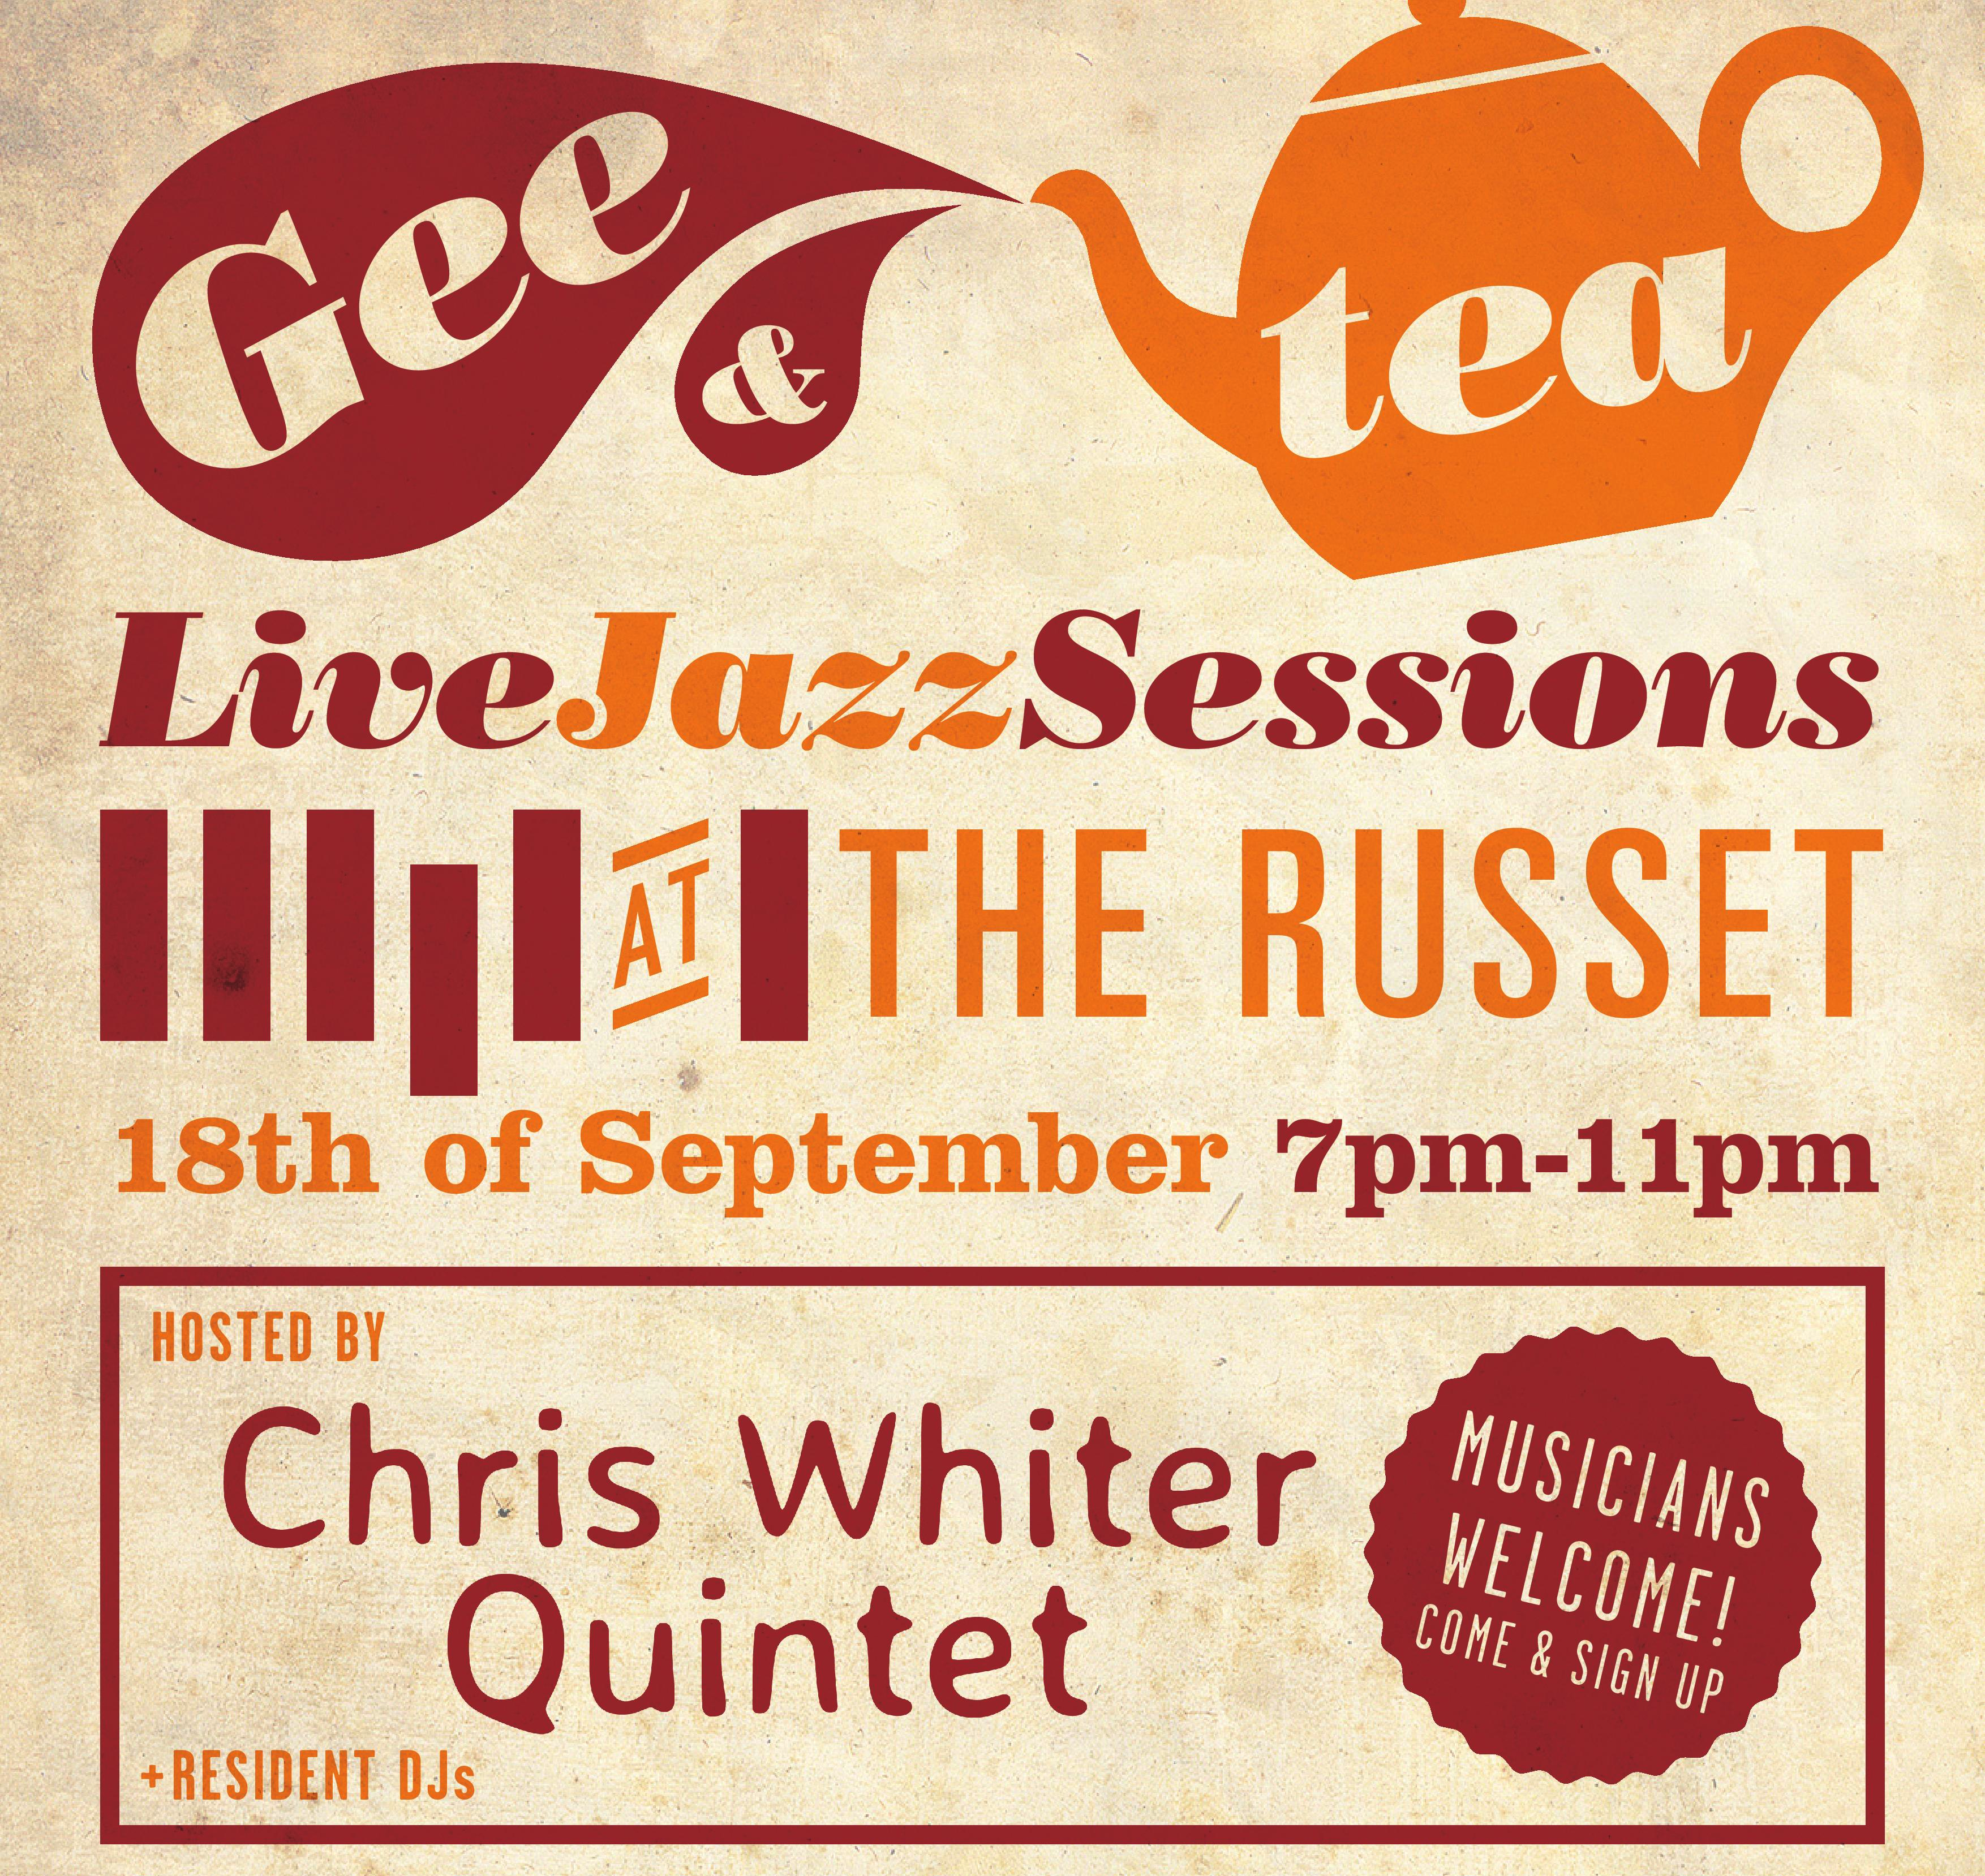 The Chris Whiter Quintet launch night